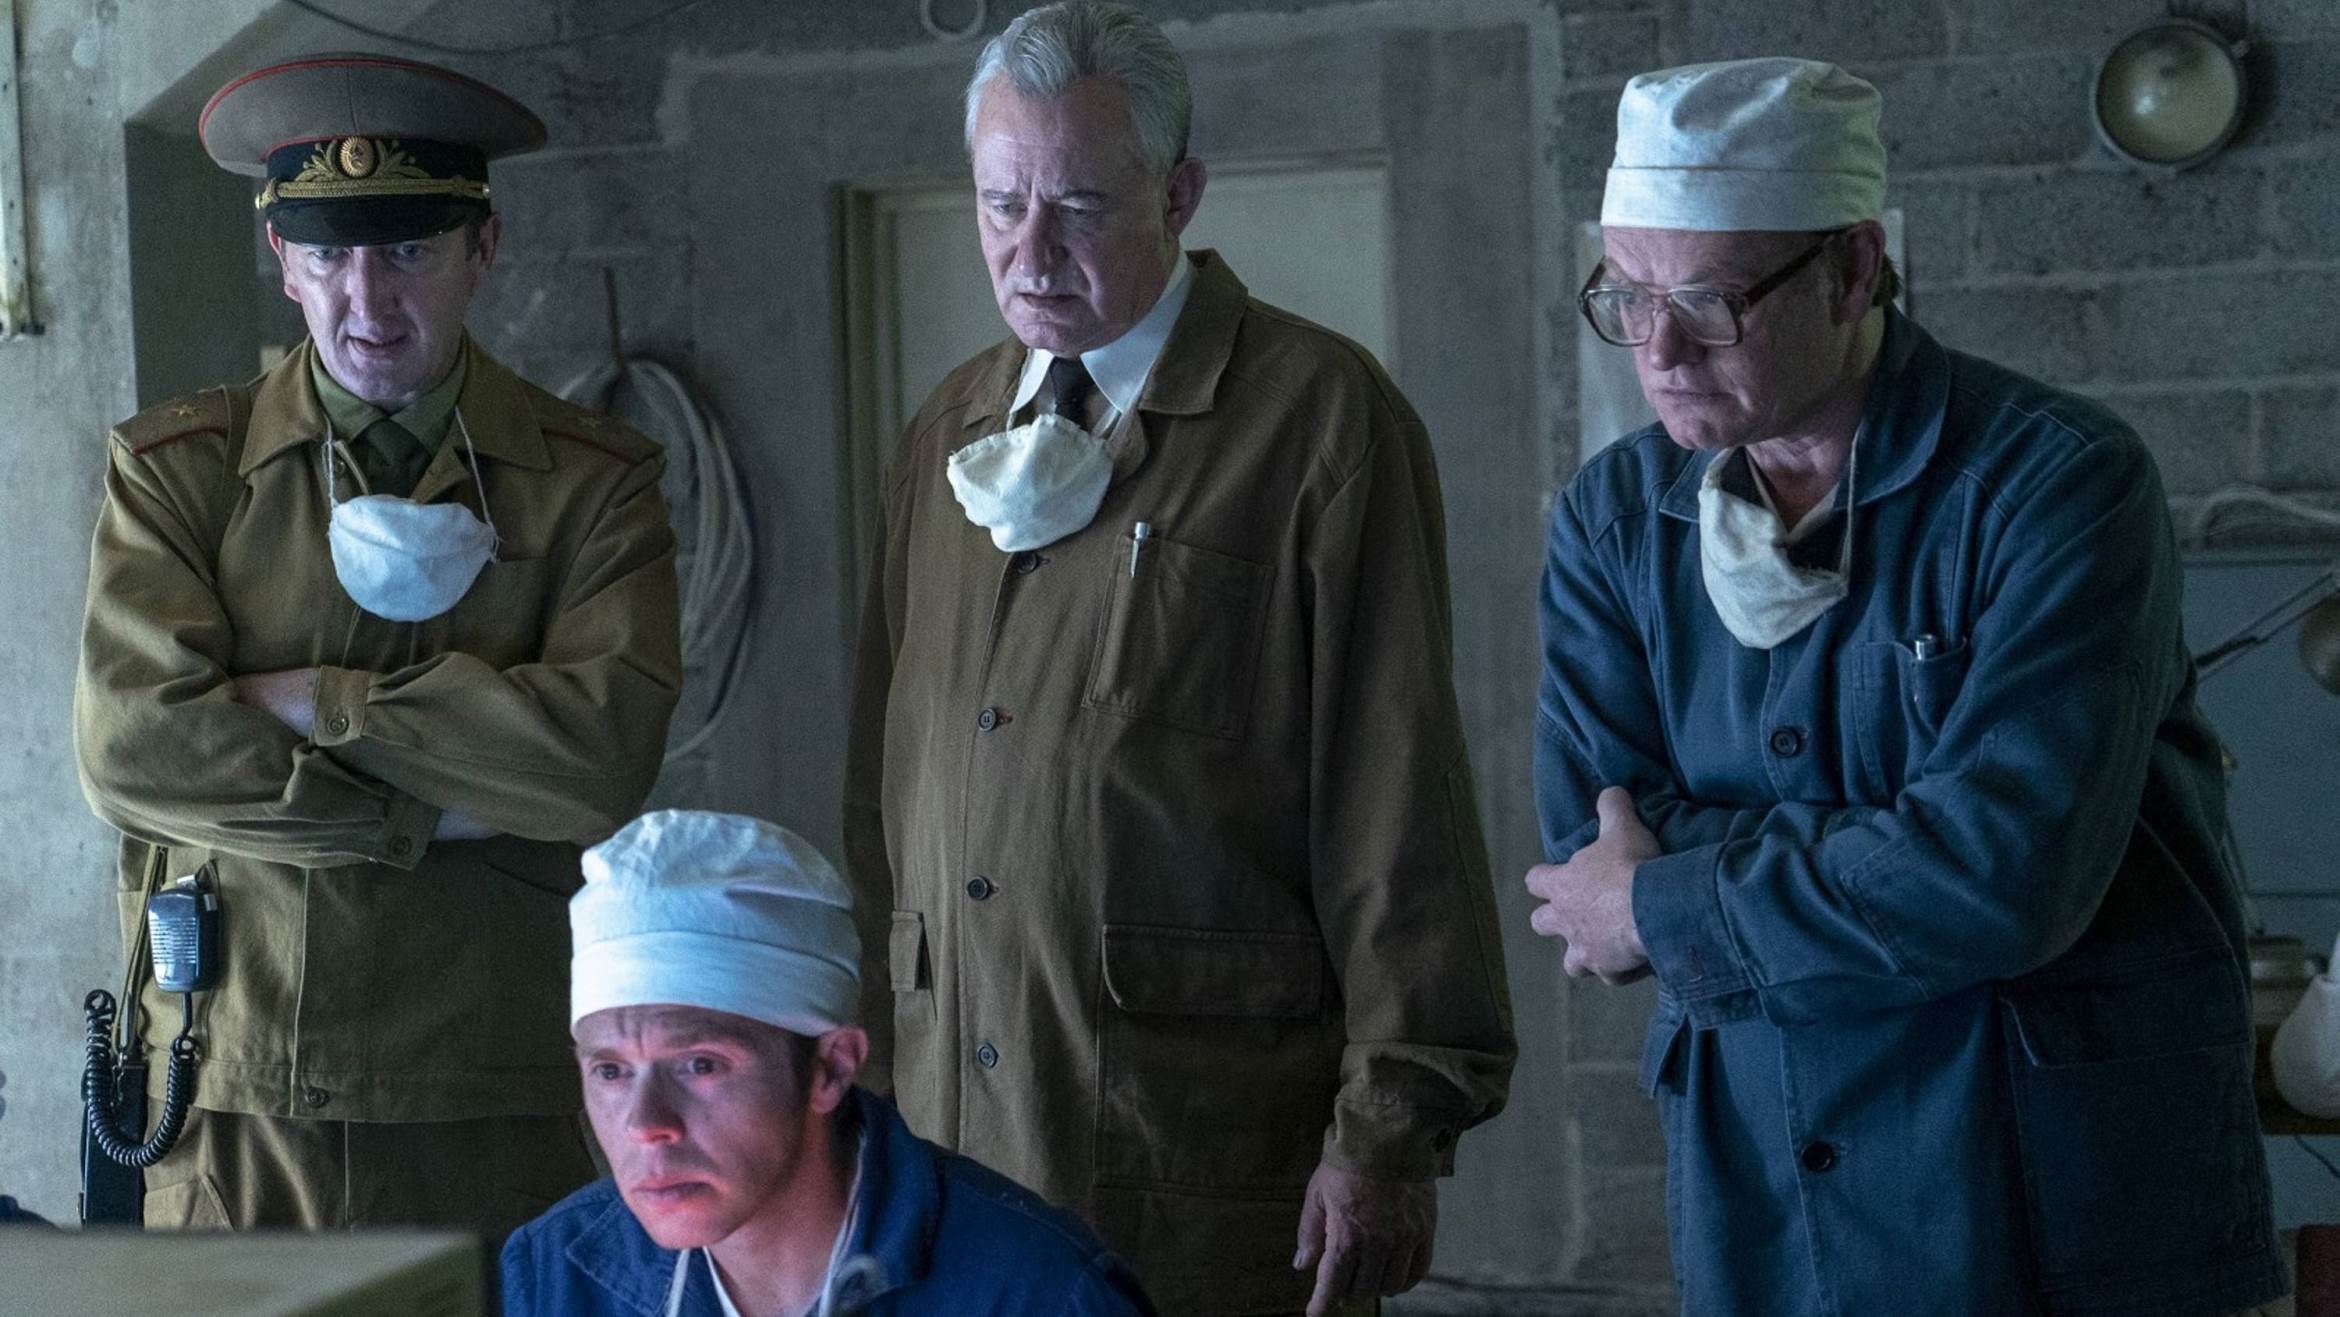 Ralph Ineson, Mark Bagnall, Stellan Skarsgard und Jared Harris in "Chernobyl" - 